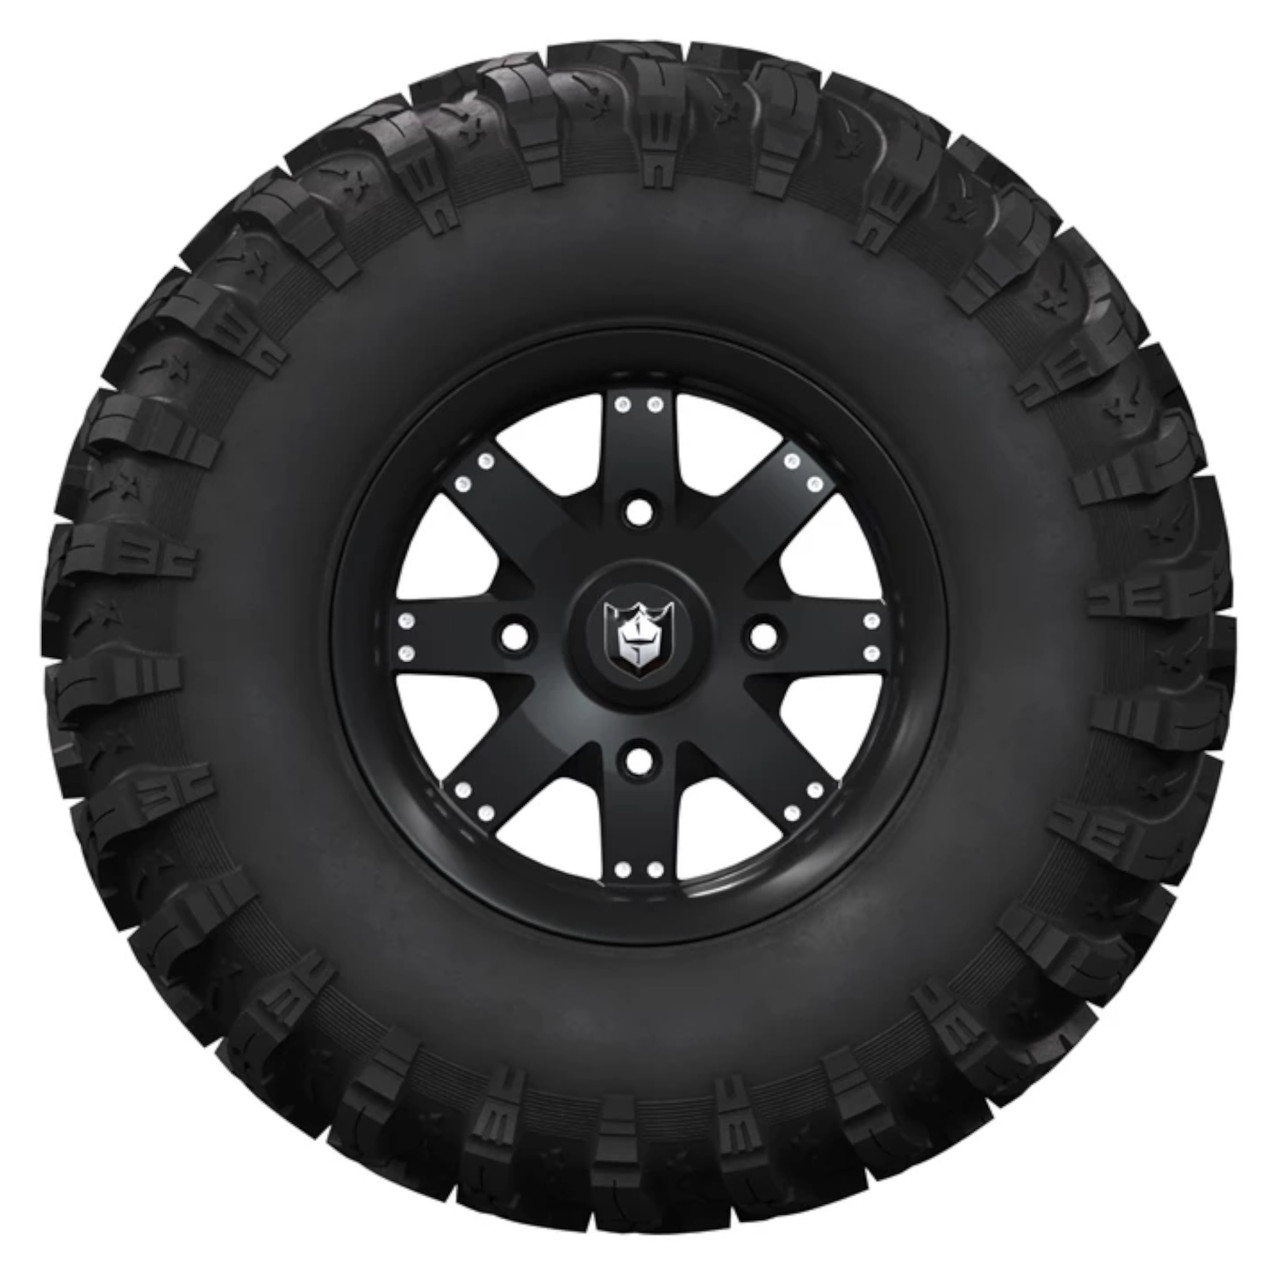 Polaris New OEM Pro Armor Wheel & Tire Set: X Terrain, 29 Inch Diameter, 2889977